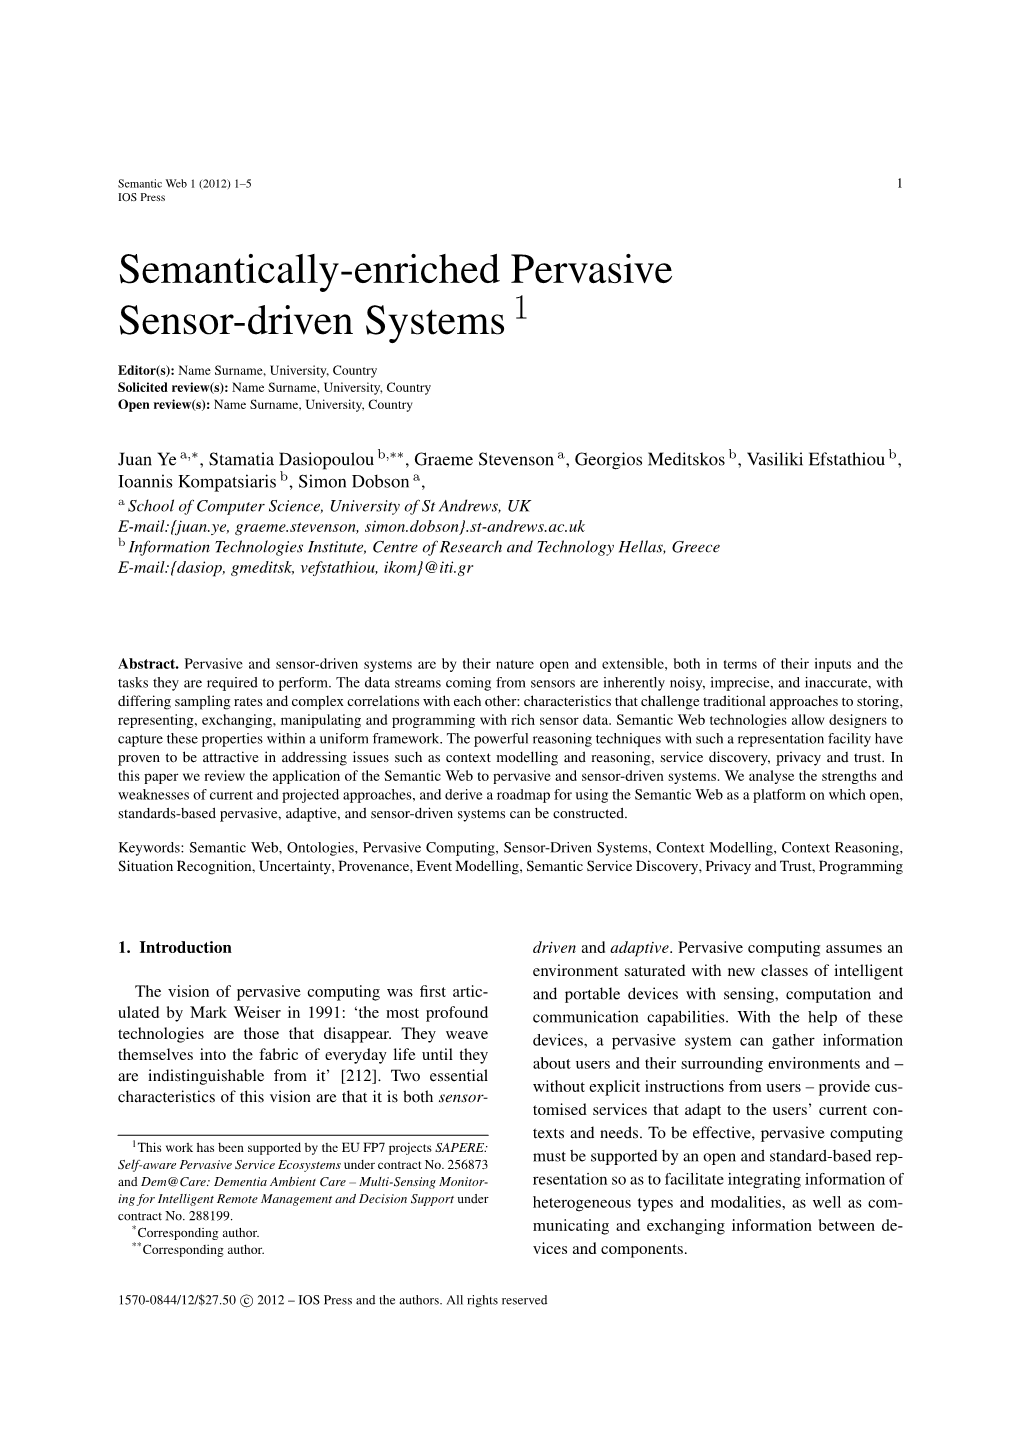 Semantically-Enriched Pervasive Sensor-Driven Systems1